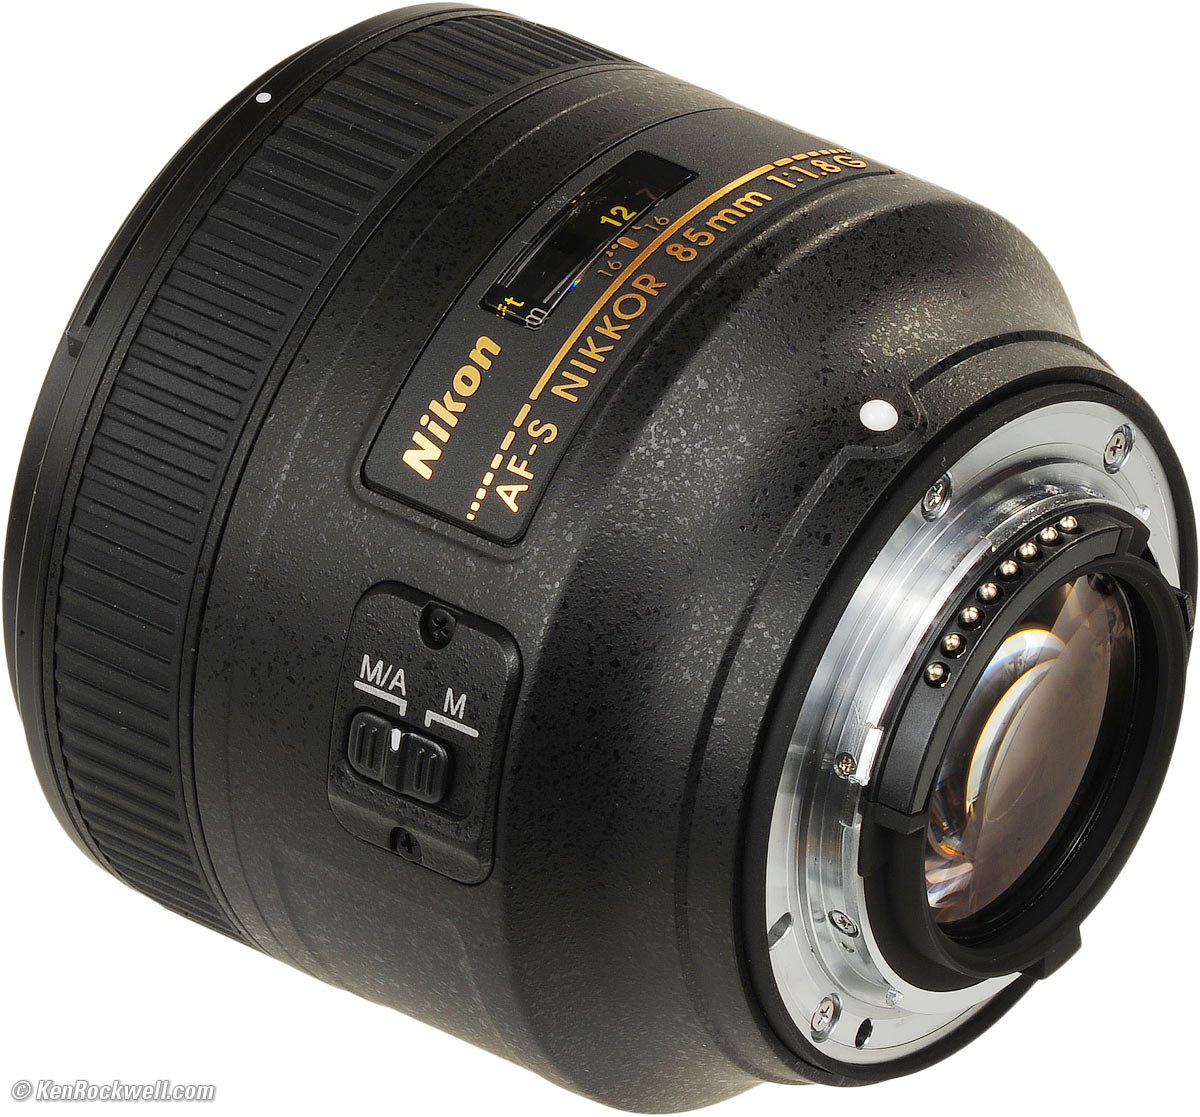 Nikon 85mm f/1.8 G Review